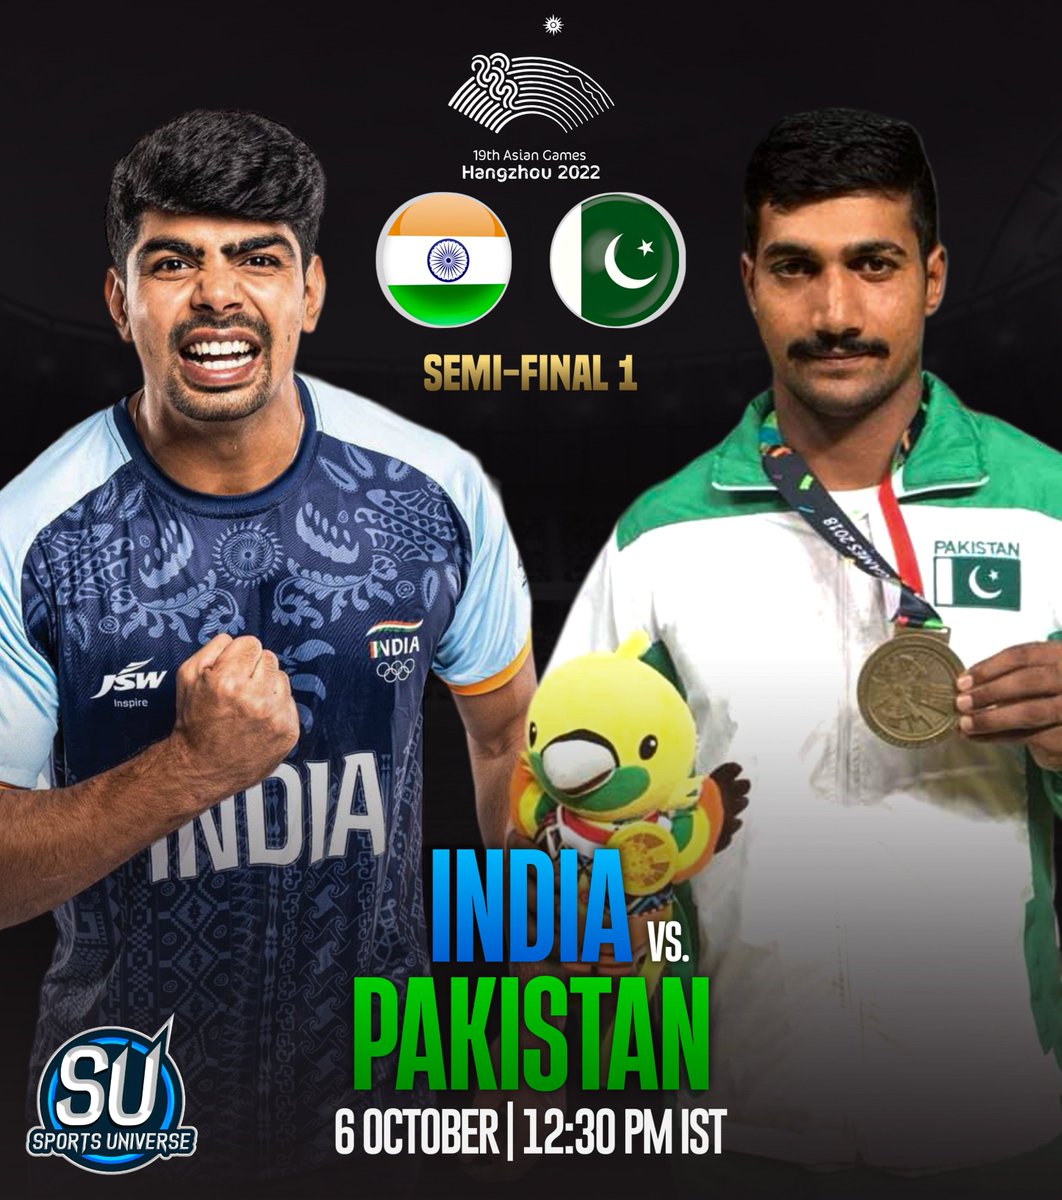 The big clash! 🤜🤛
India 🇮🇳 vs Pakistan 🇵🇰 in Men's Kabaddi Semi-Final in the Asian Games 💥
.
.
.
#AsianGames #AsianGames2023 #TeamIndia #India #Kabaddi #IndianKabaddi #IndiavsPakistan #INDvsPAK #SportsUniverse